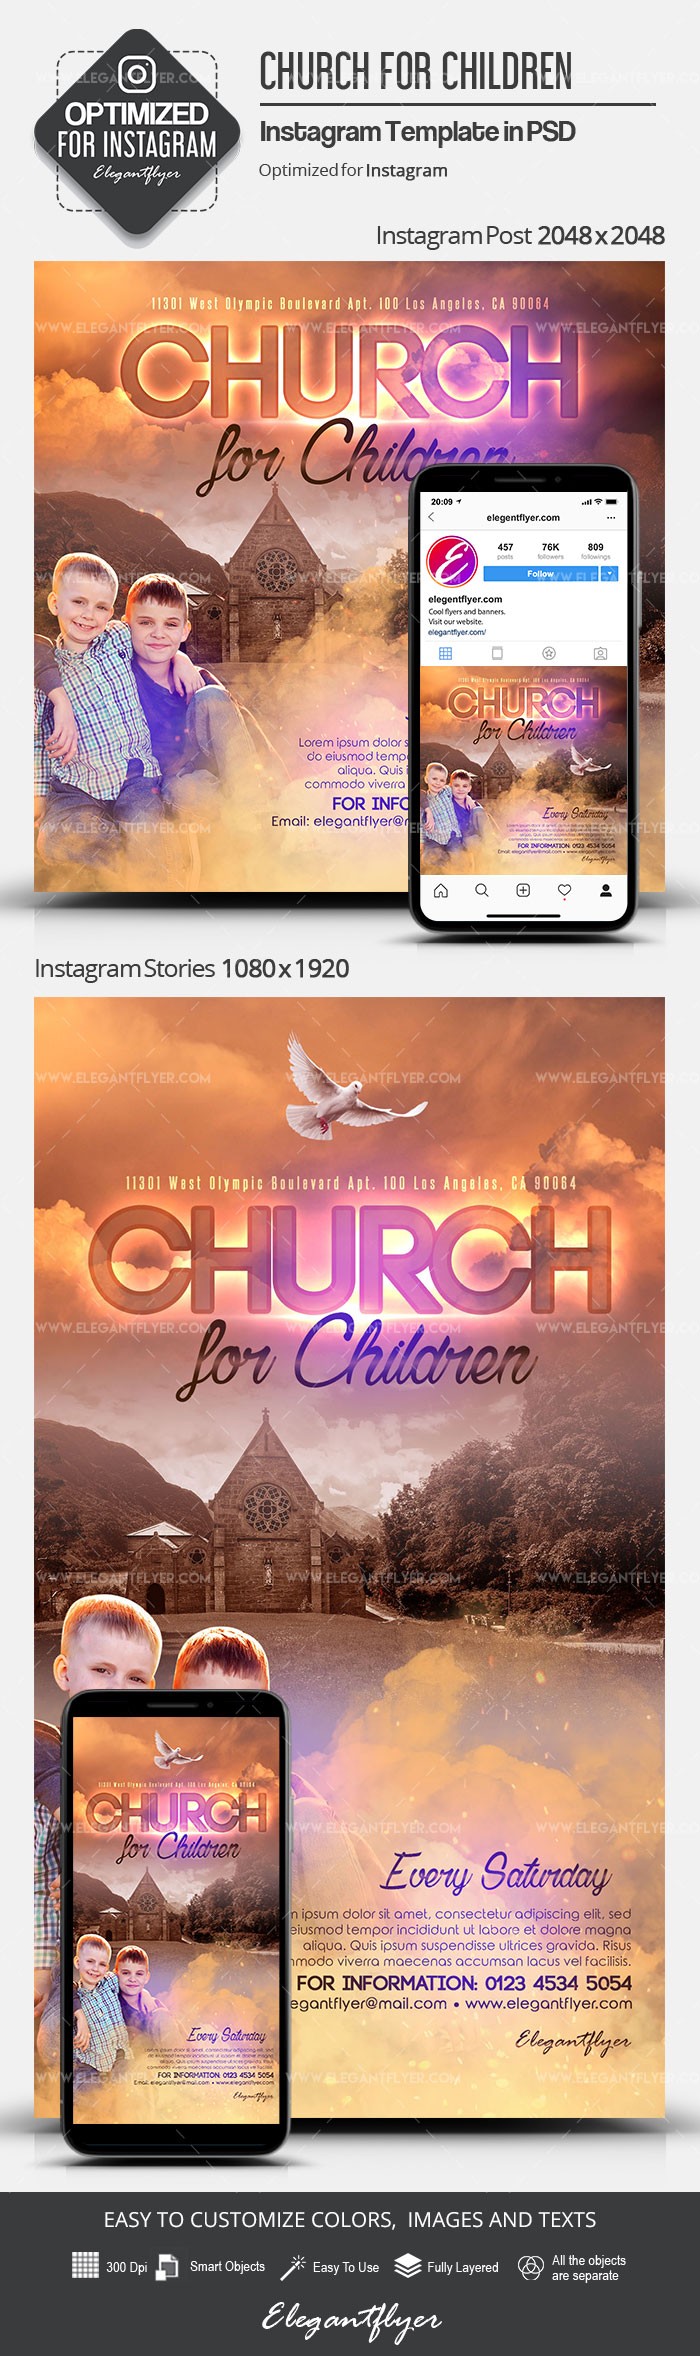 Chiesa per Bambini Instagram by ElegantFlyer